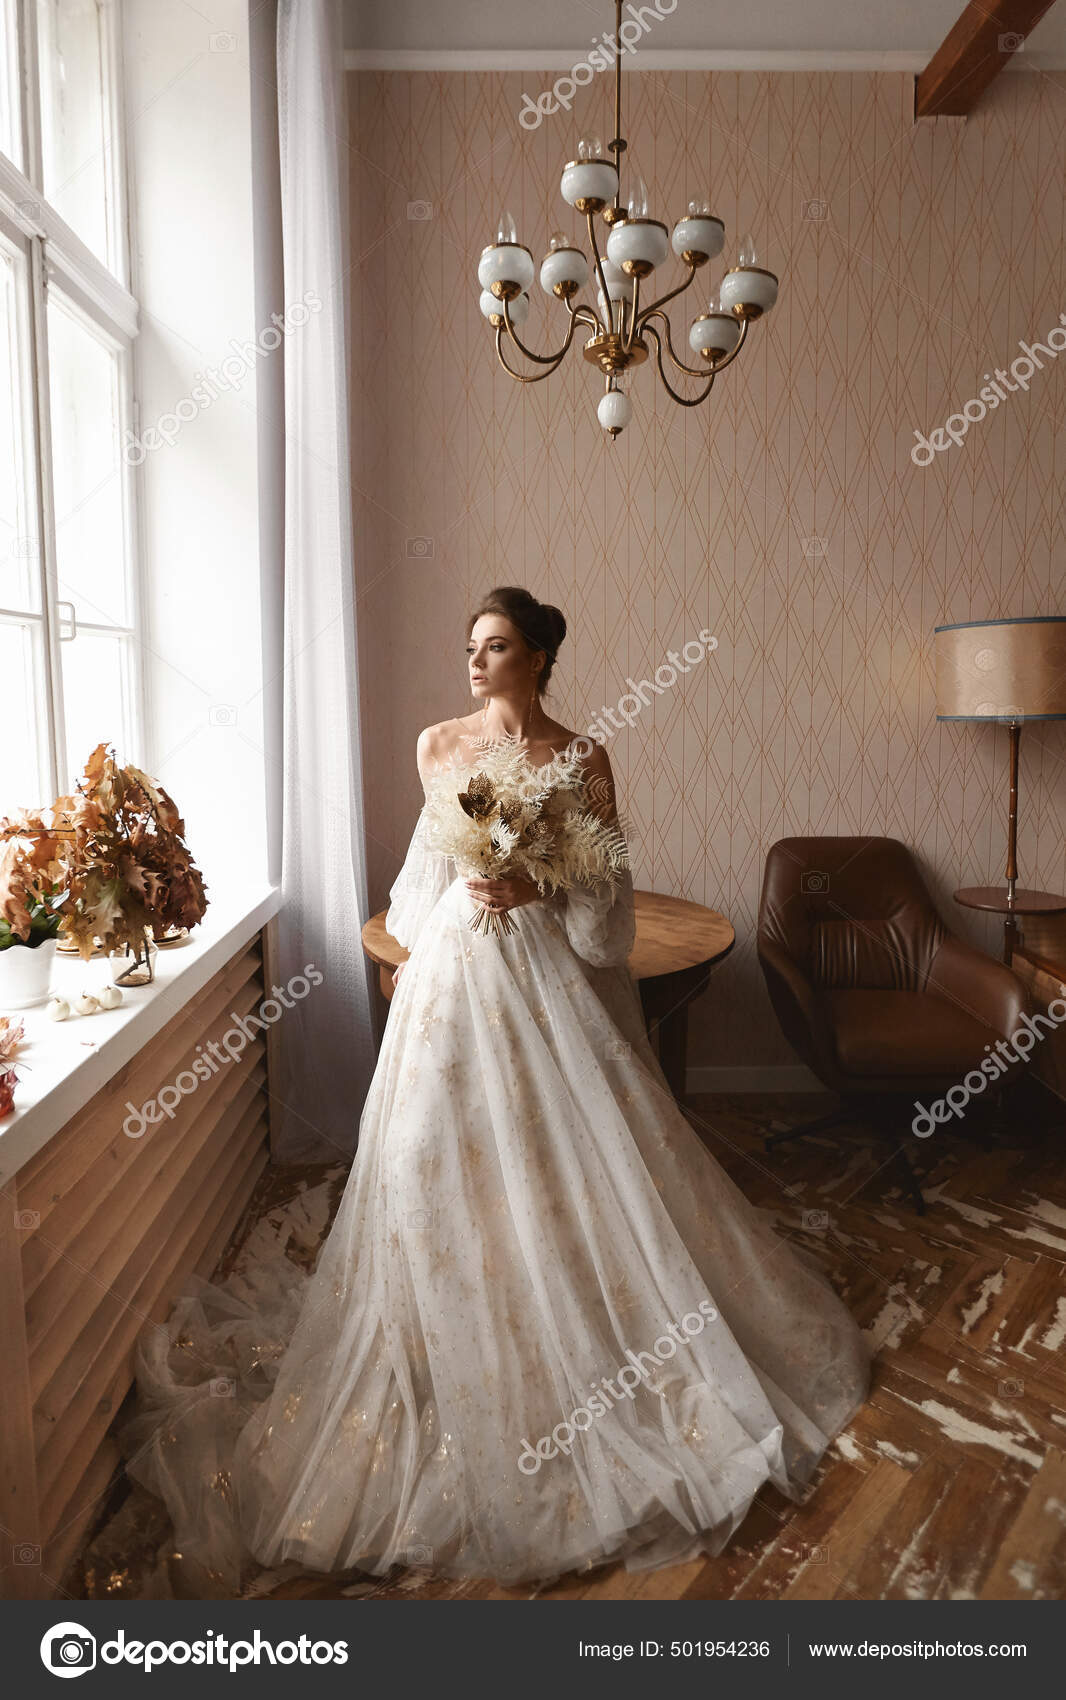 Wedding pose ideas for bride | Best bridal photography pose ideas for girl  | Wedding photography | - YouTube